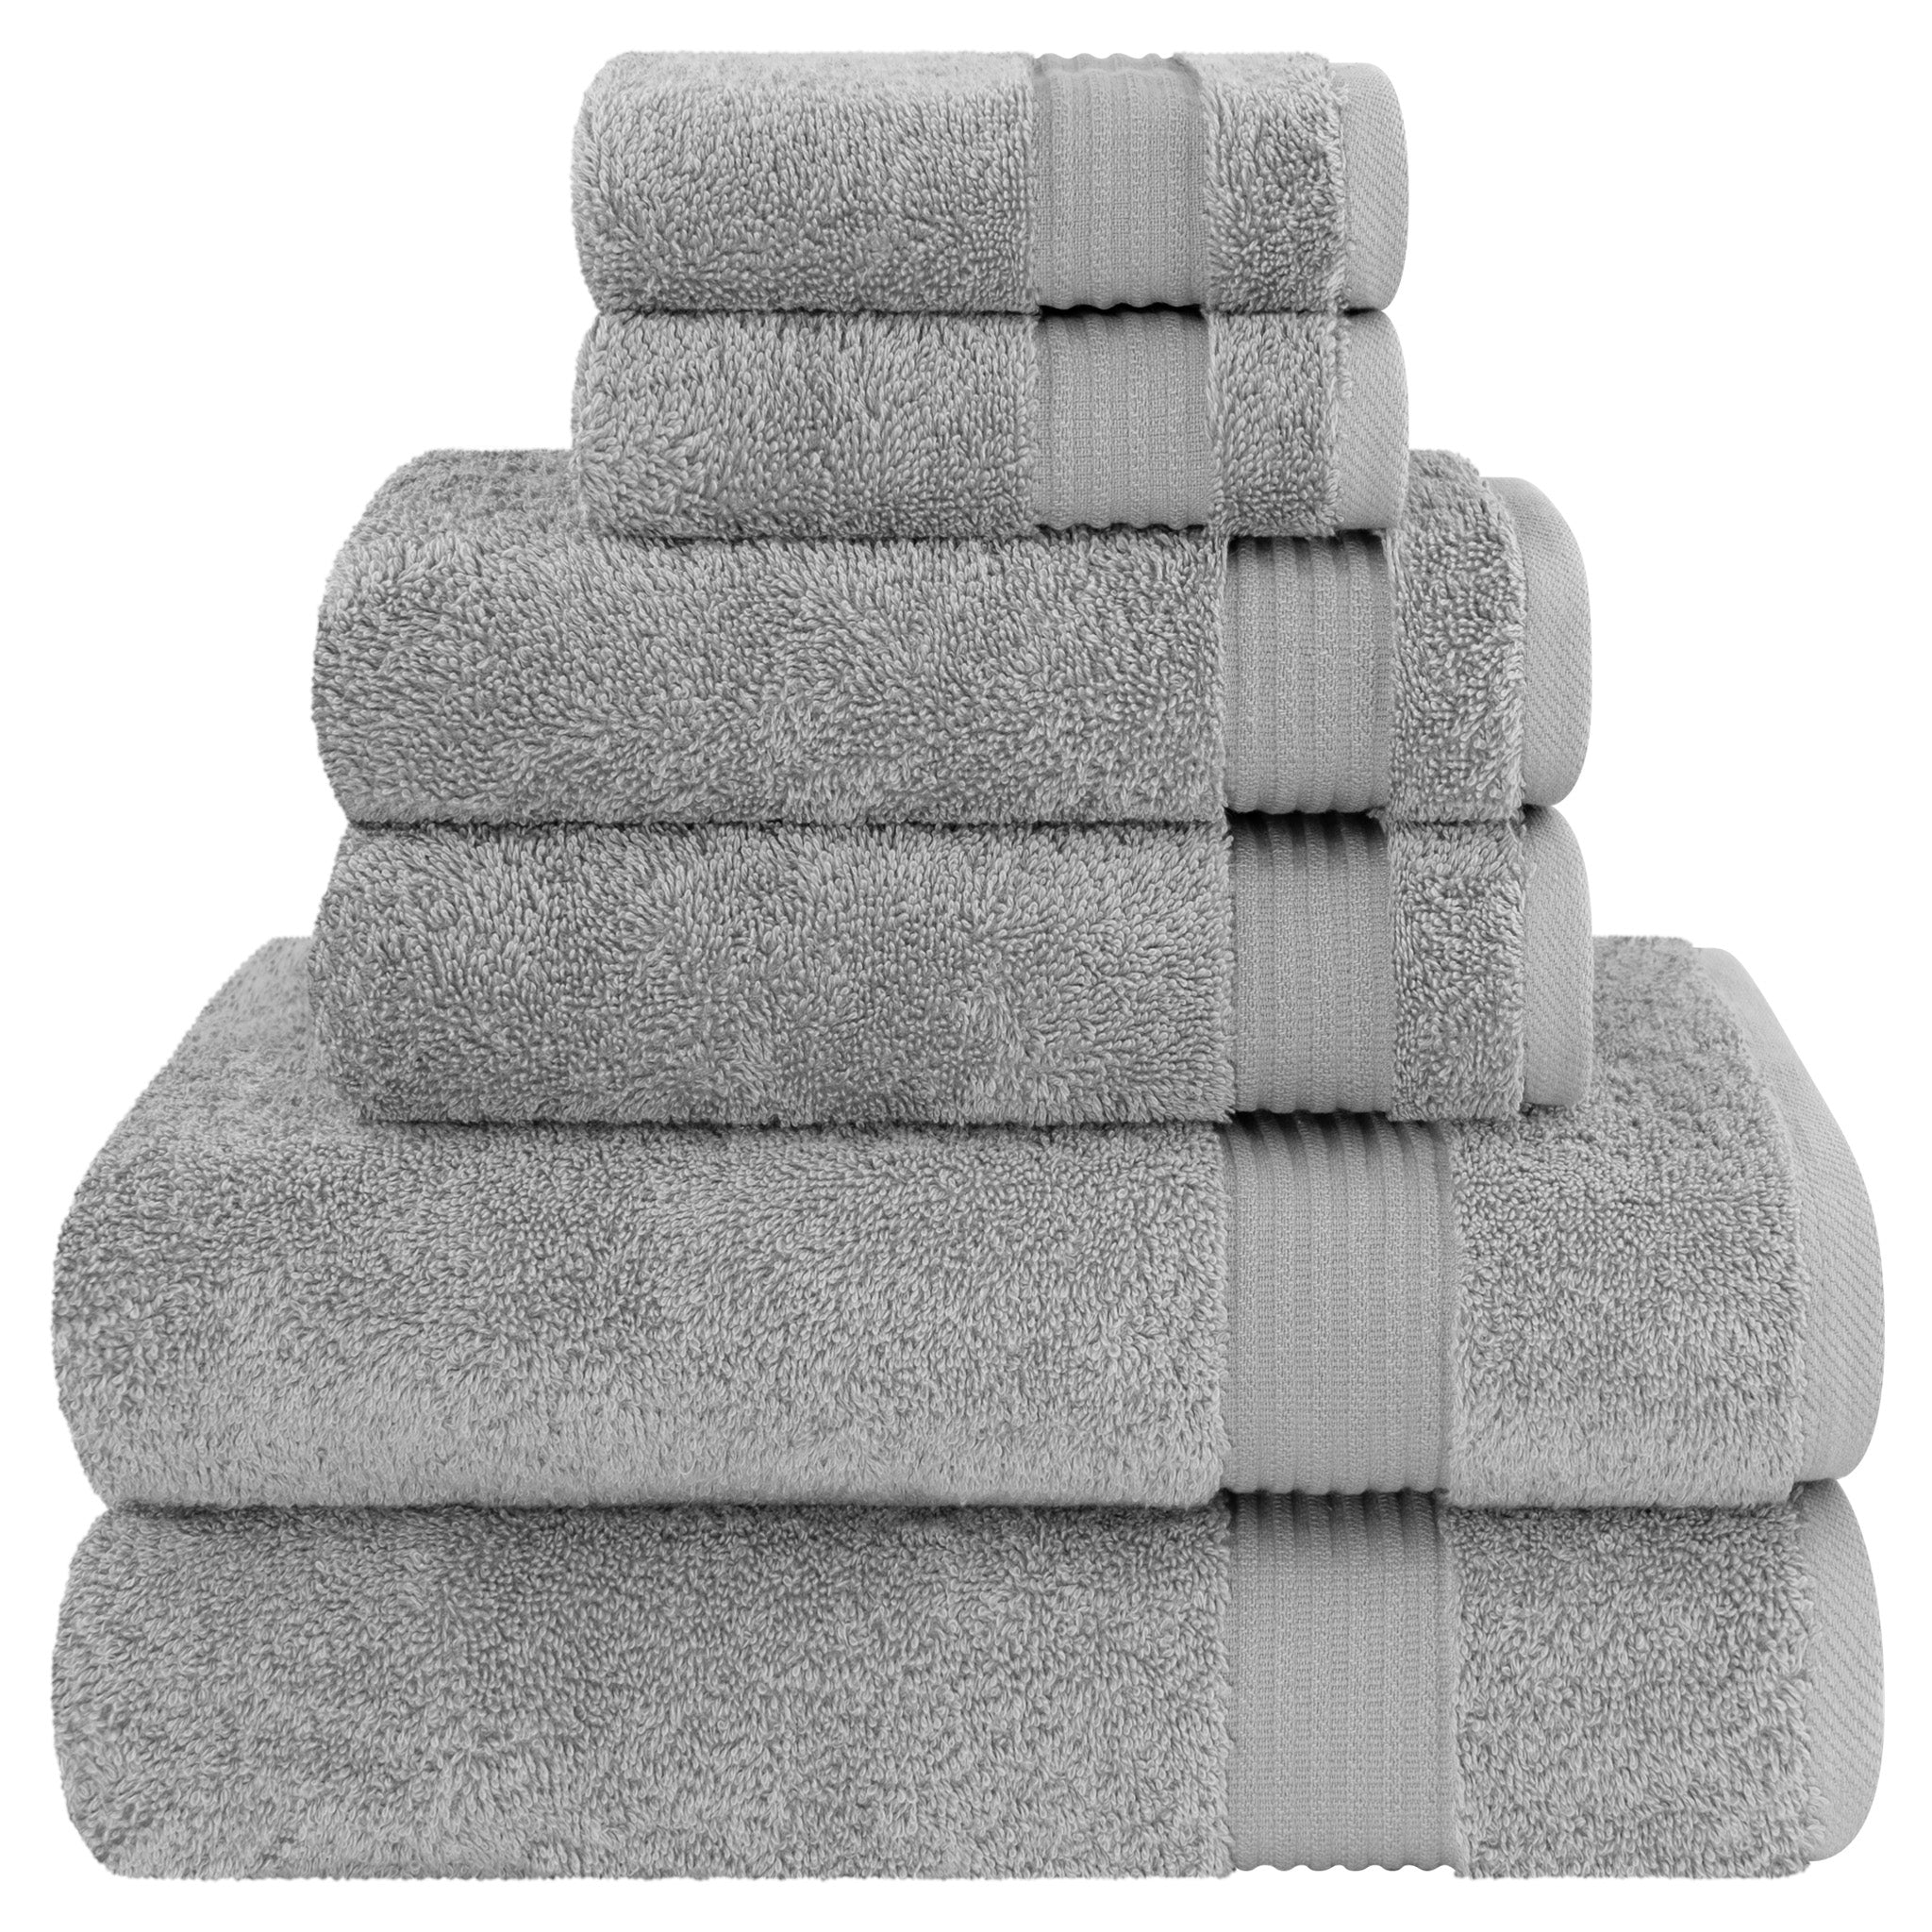 American Soft Linen Bekos 100% Cotton Turkish Towels 6 Piece Bath Towel Set -rockridge-gray-01